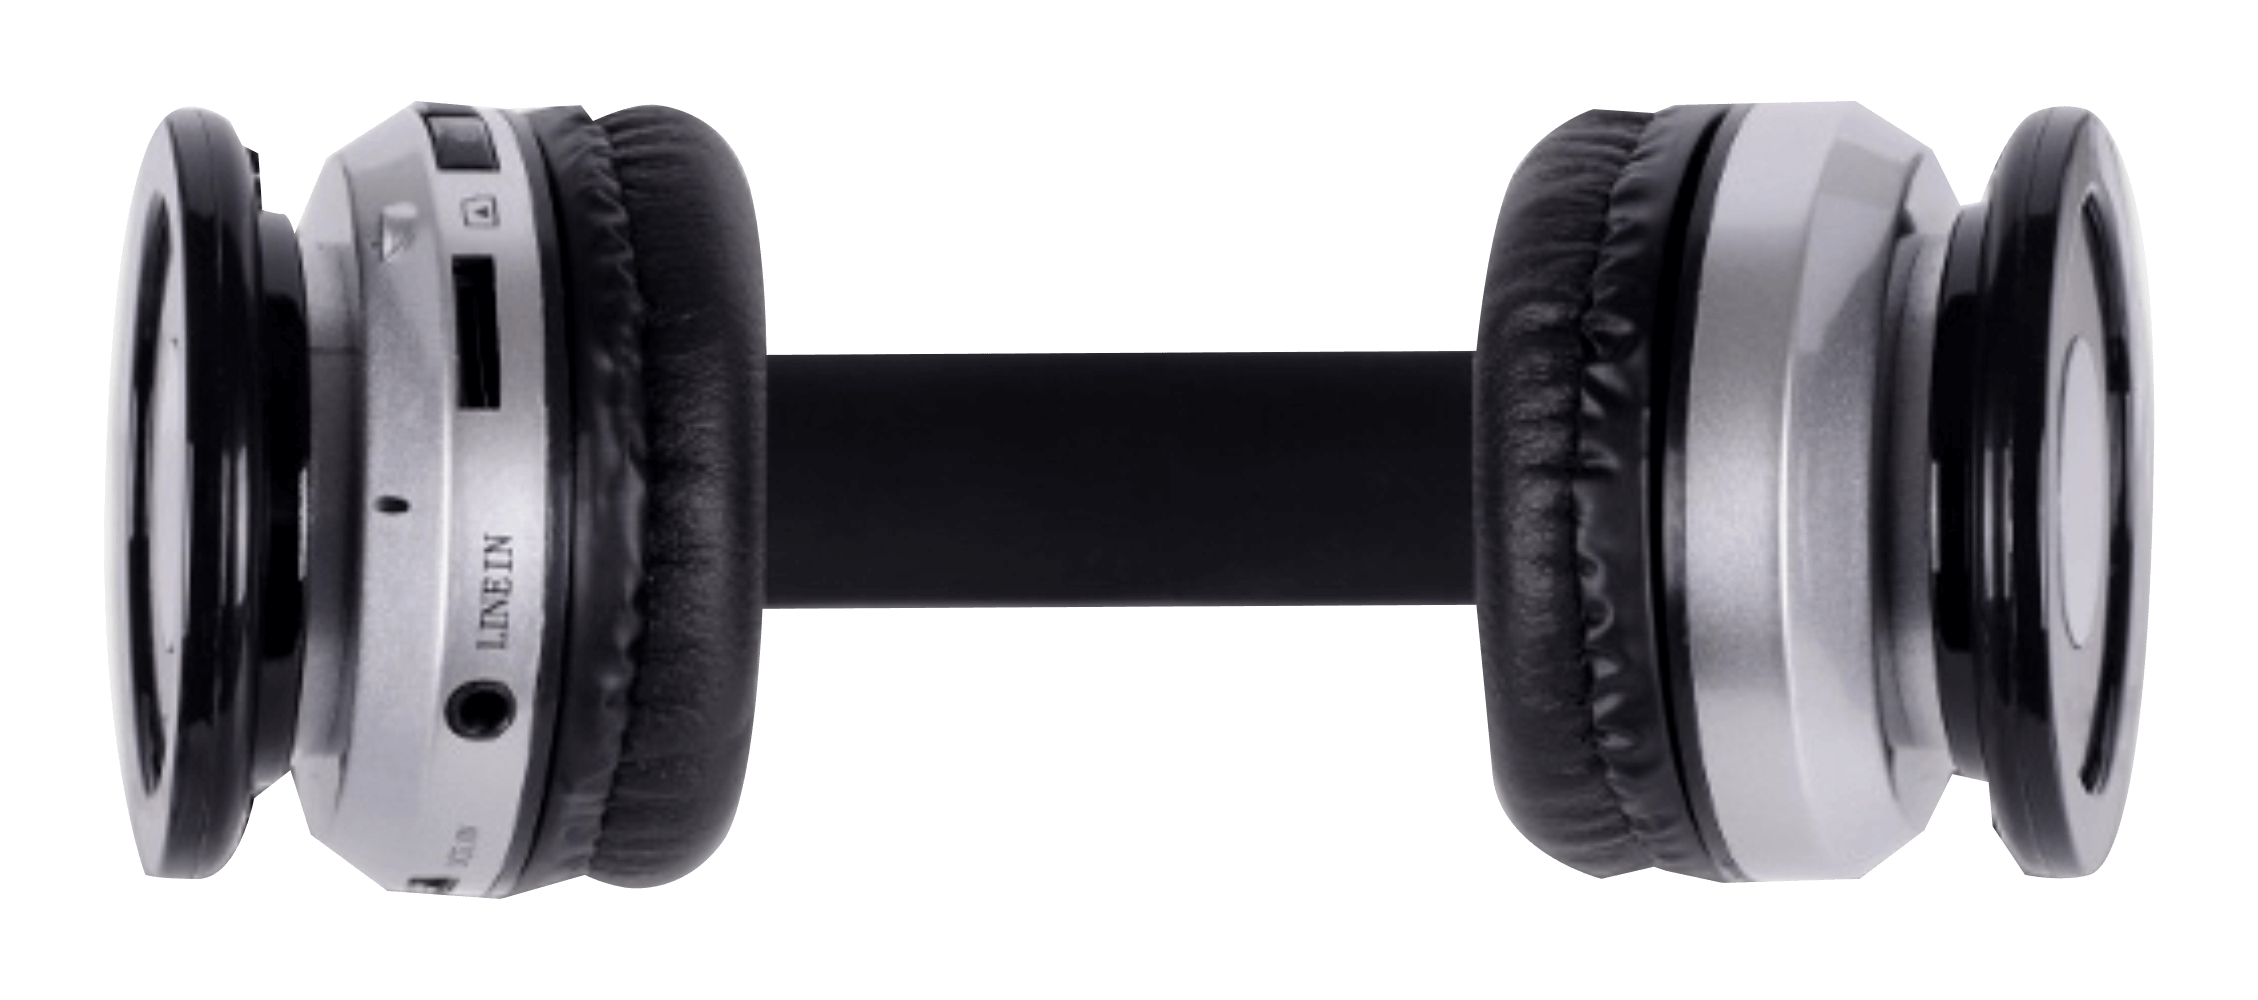 LG K8 (K350n) bluetooth fejhallgató Rebeltec Crystal fekete